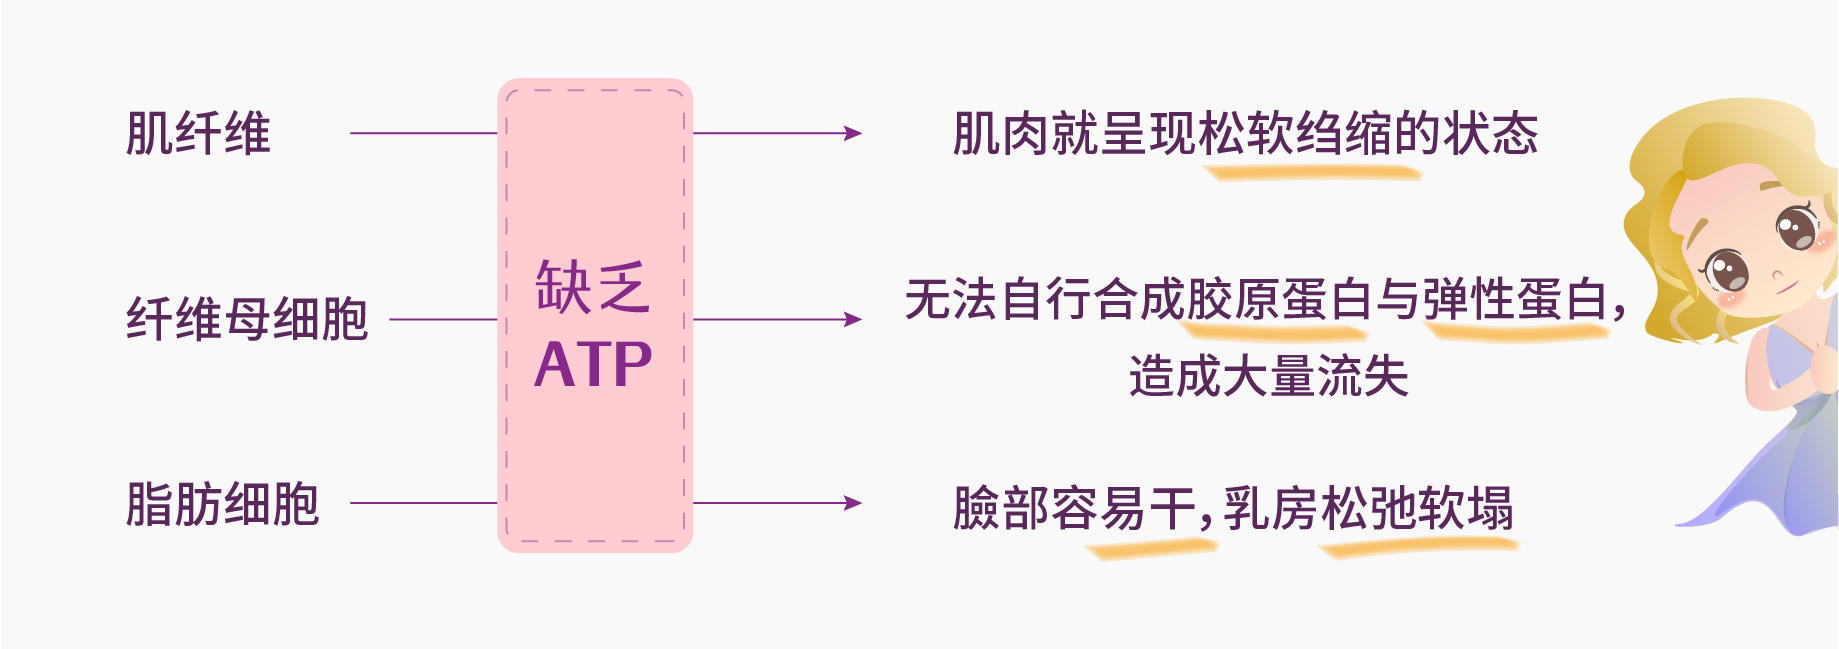 ATP與抗老知乎配圖_工作區域 1 複本 3.jpg